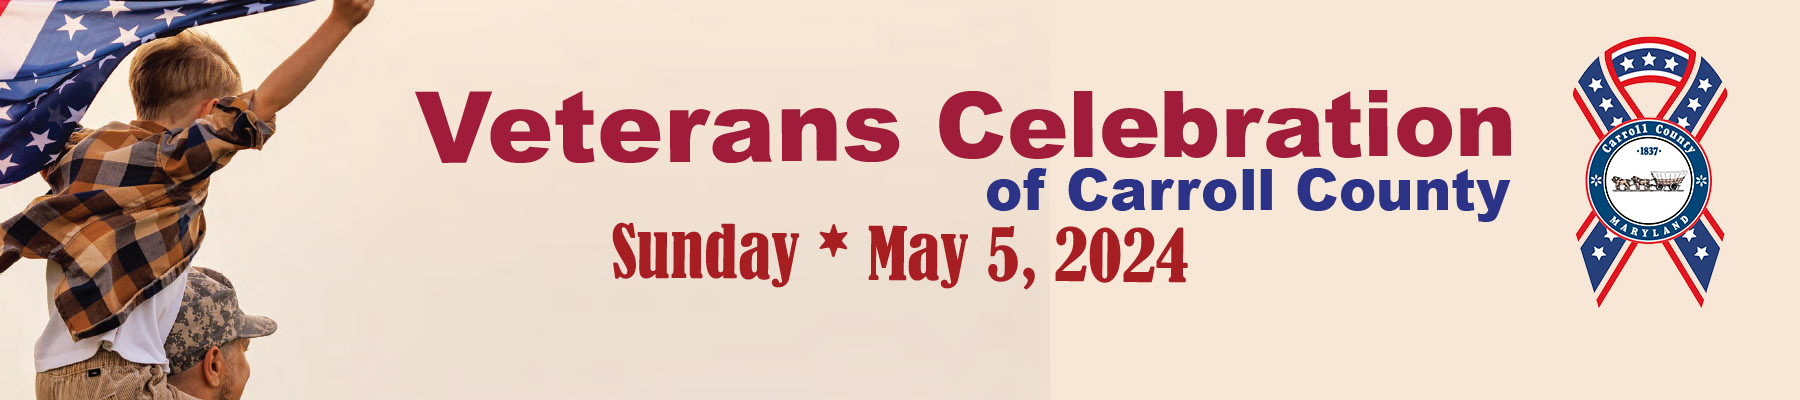 Veterans Celebration Countdown 2024